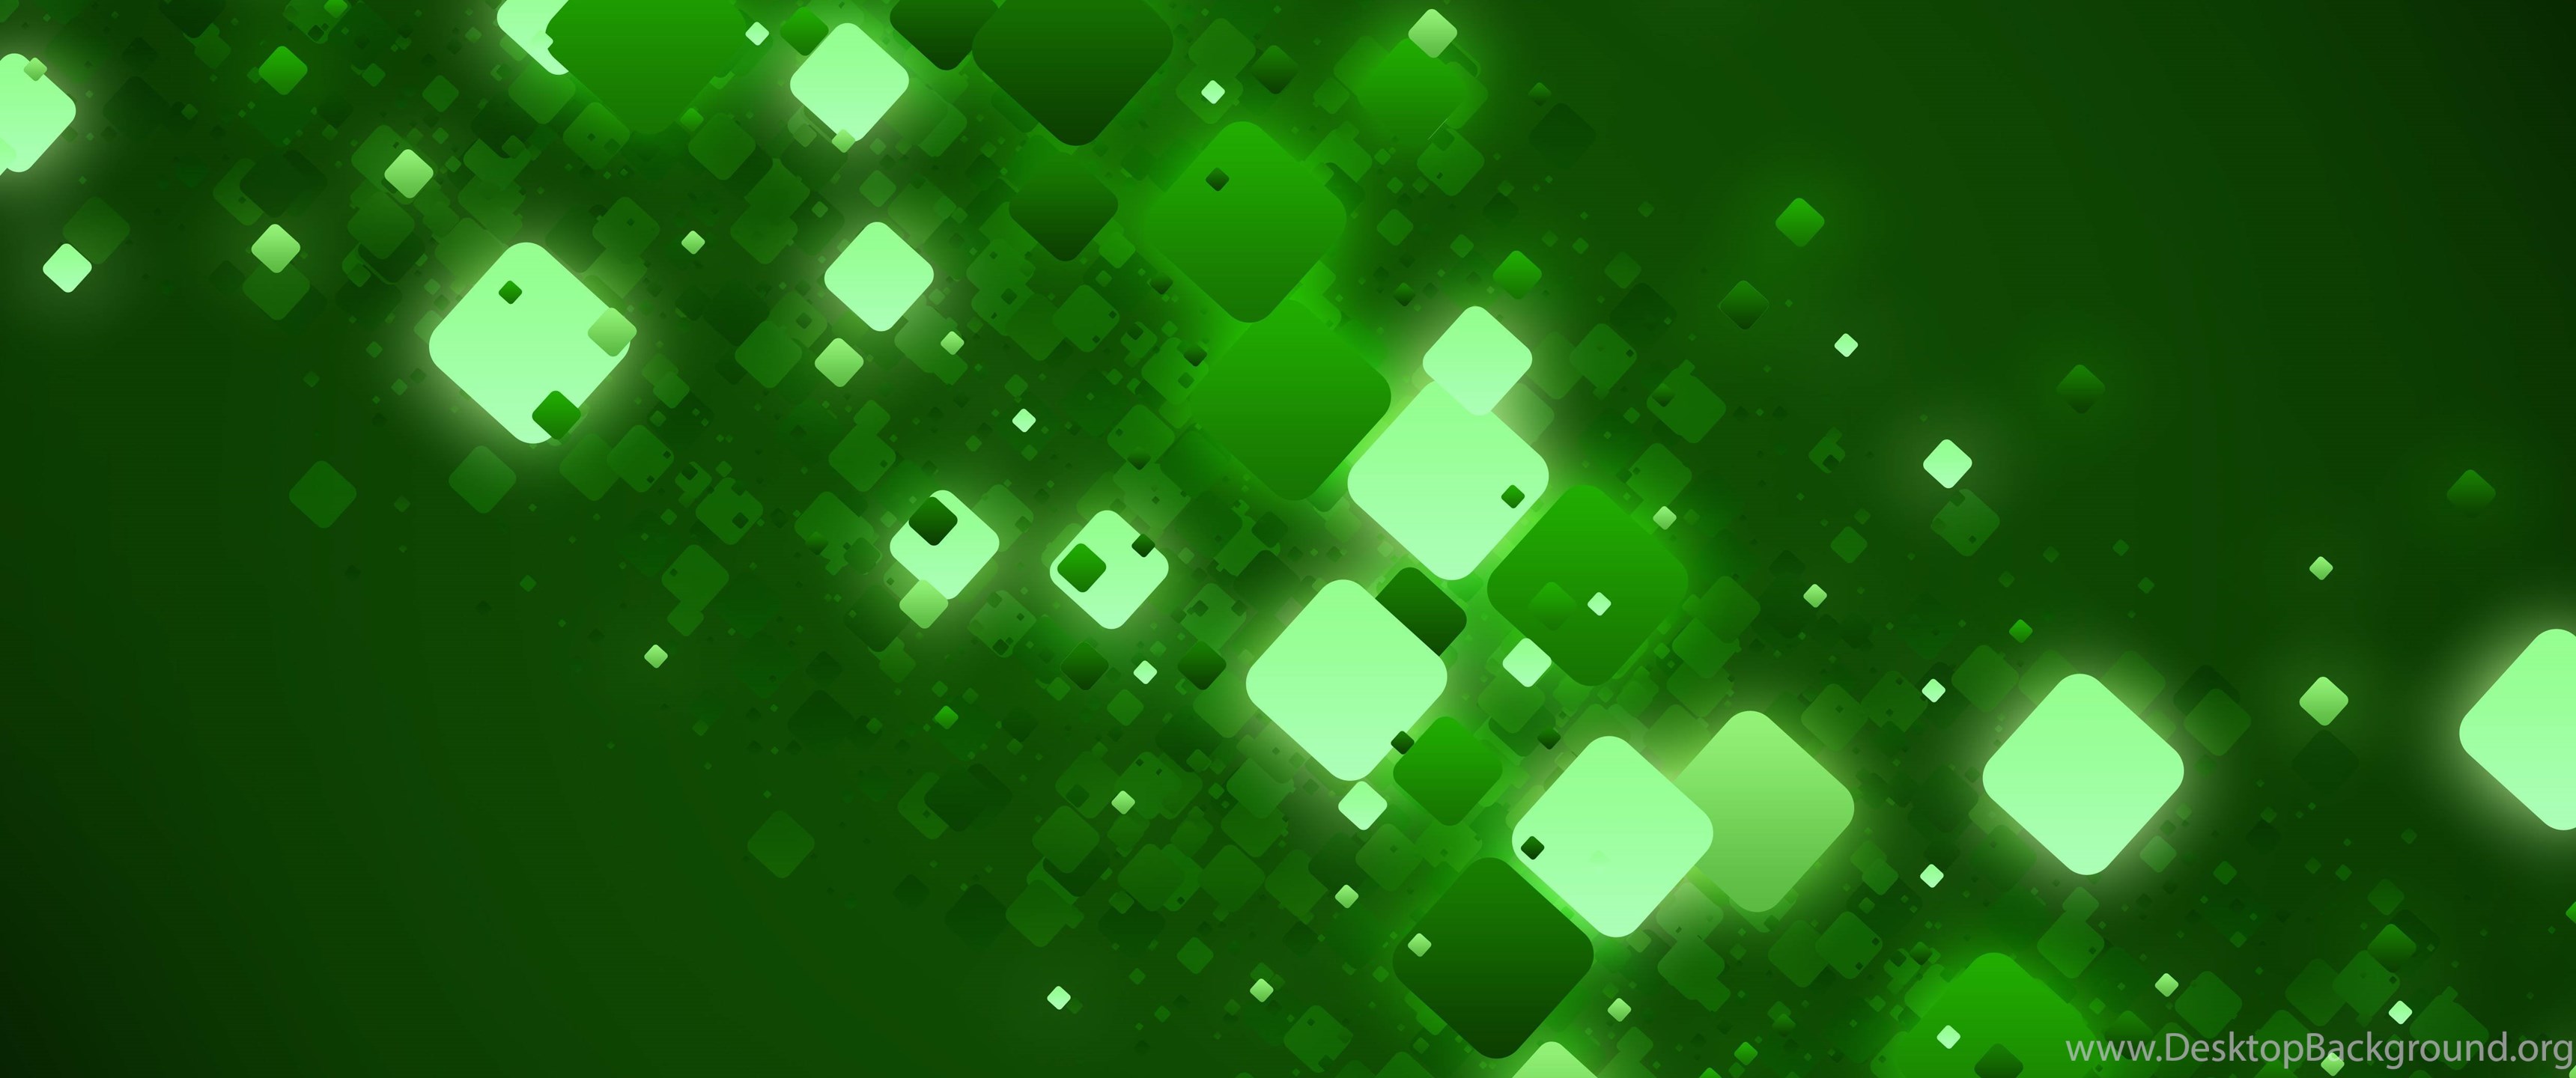 Pretty Green Wallpaper Desktop Background